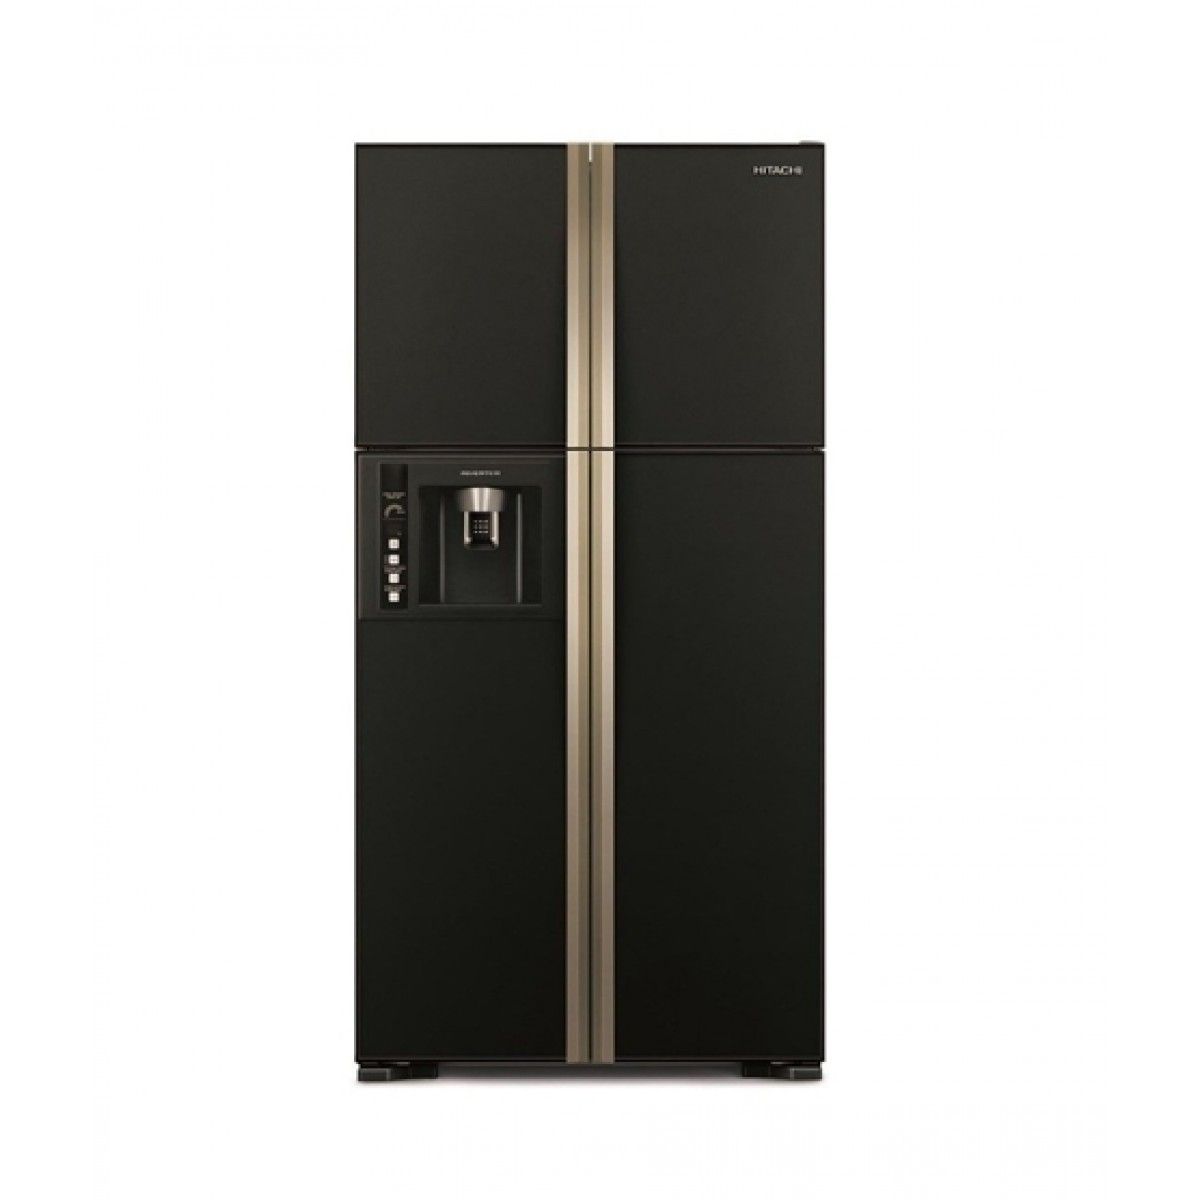 Hitachi (R-W690P3PB) French Door  21 cu ft Refrigerator